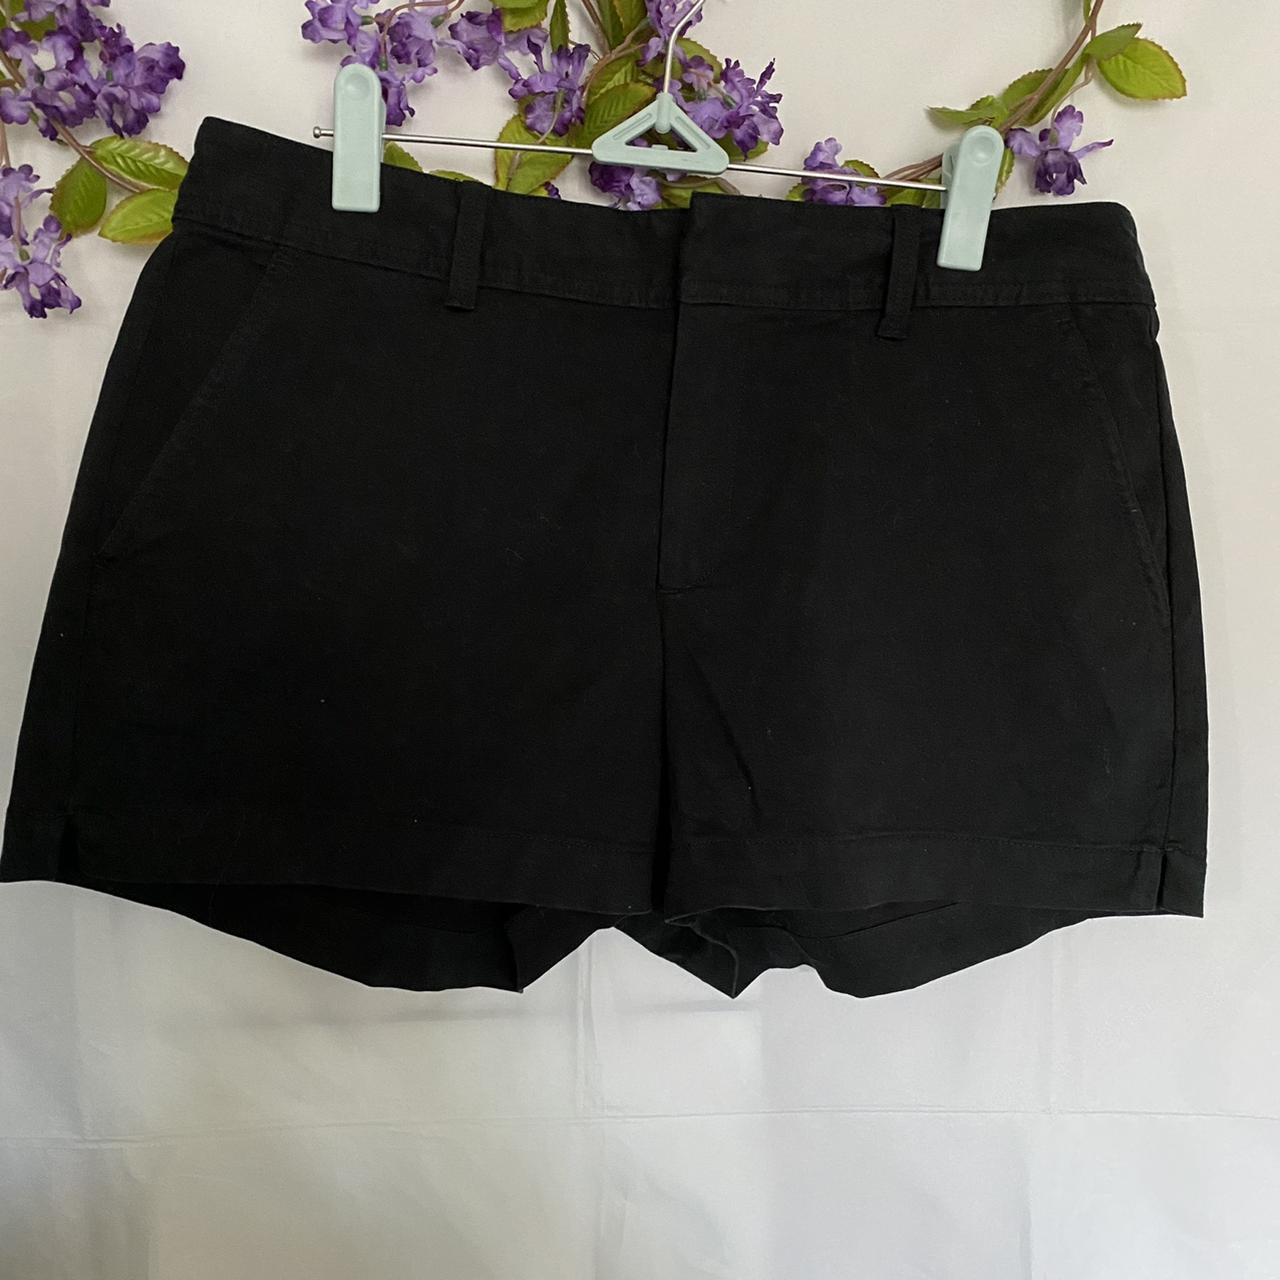 Gap Anchorage True Black soft shorts • Color: True... - Depop